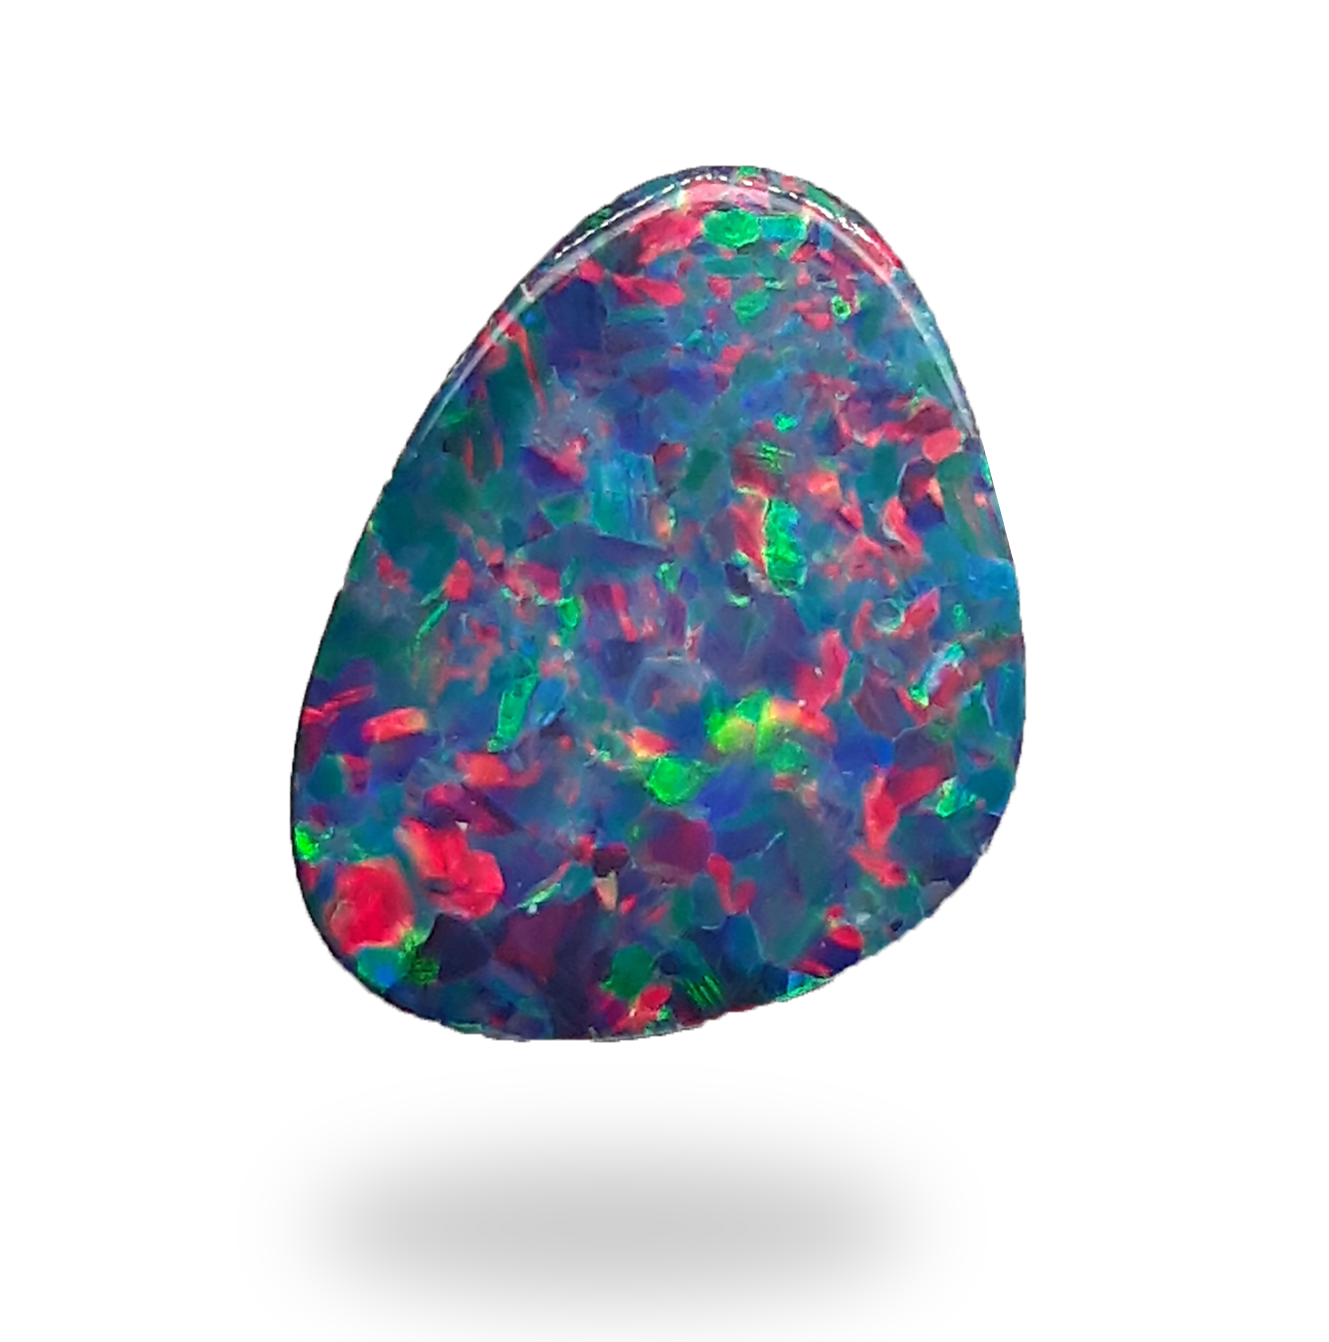 Opals Loose | Loose Opals for Sale Online | Australian Opal Cutters